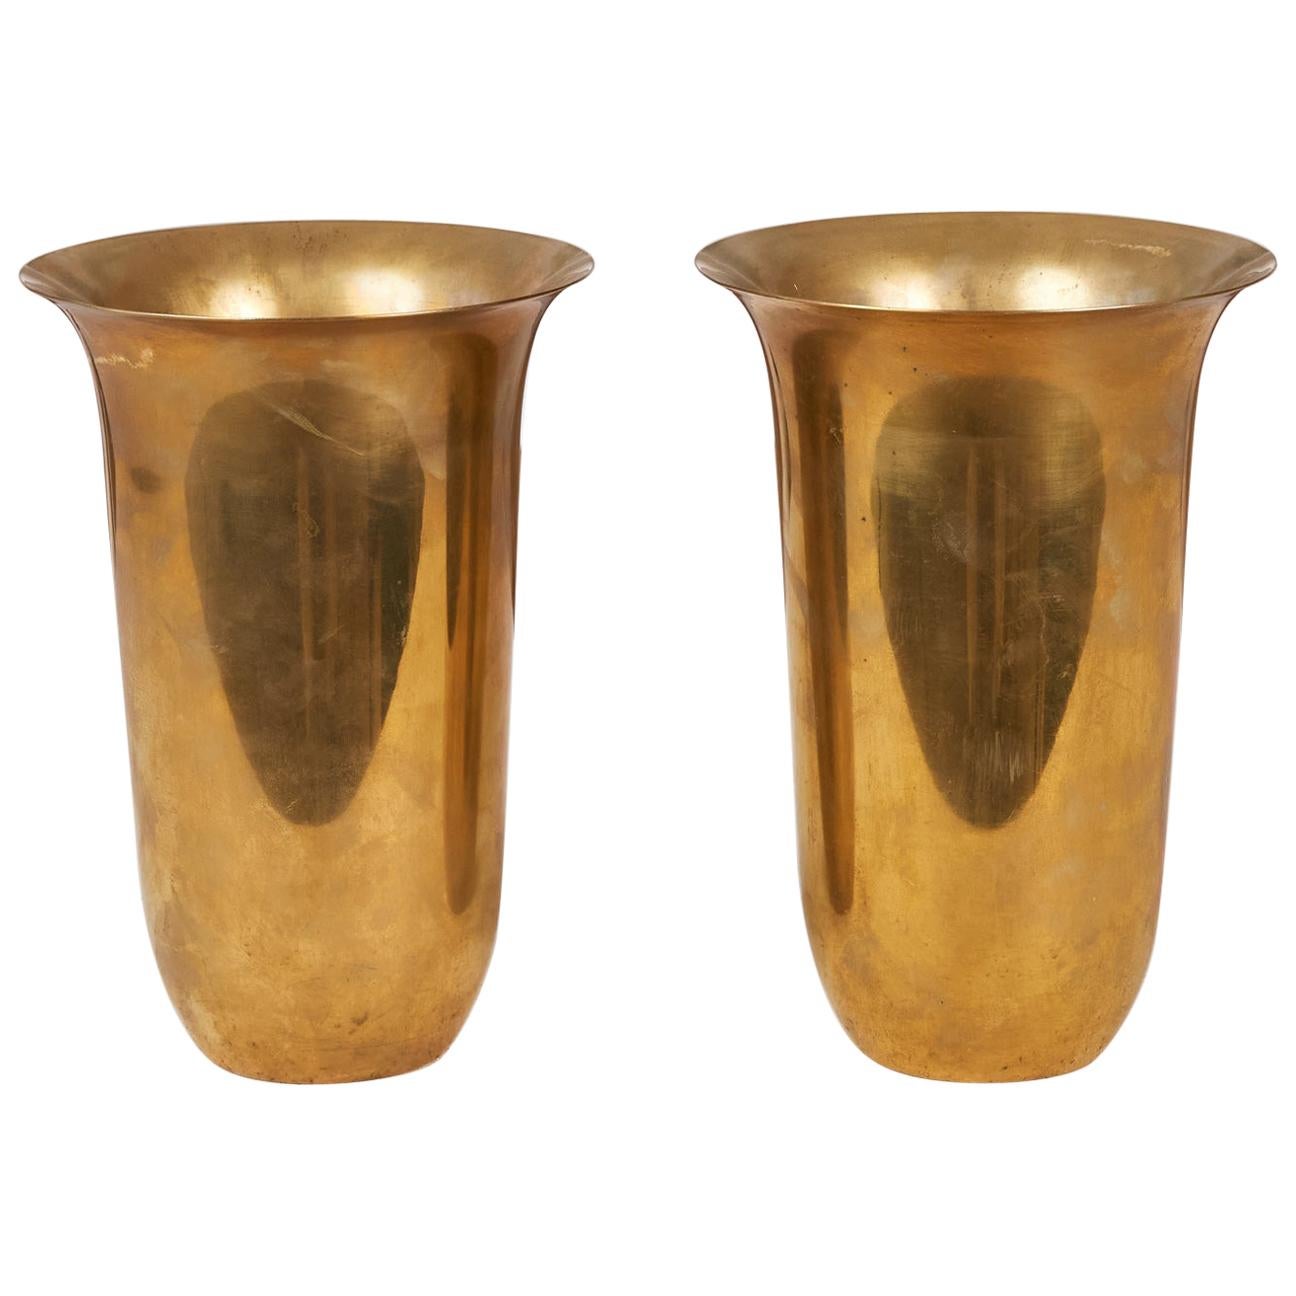 Pair of Brass Vases by Walter Von Nessen for Chase